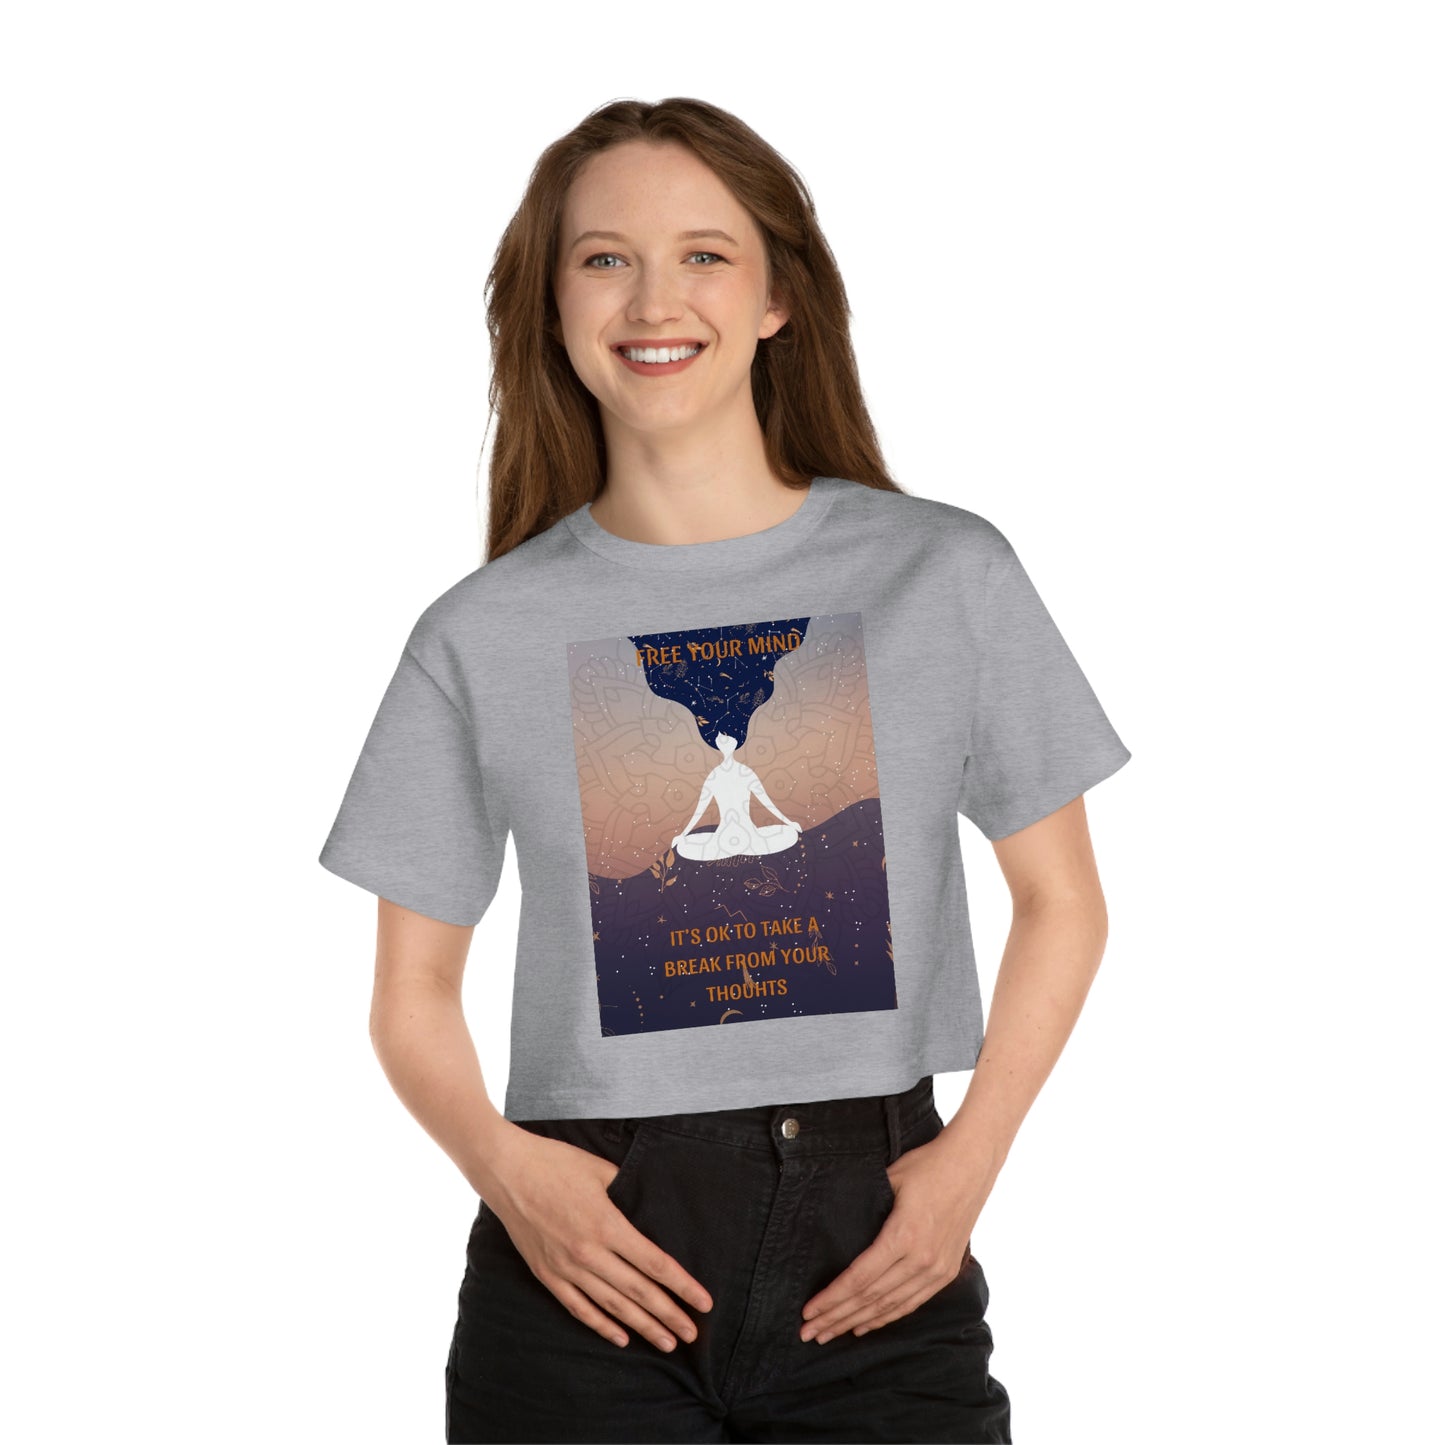 Mindfulness Champion Women's Heritage Cropped T-Shirt